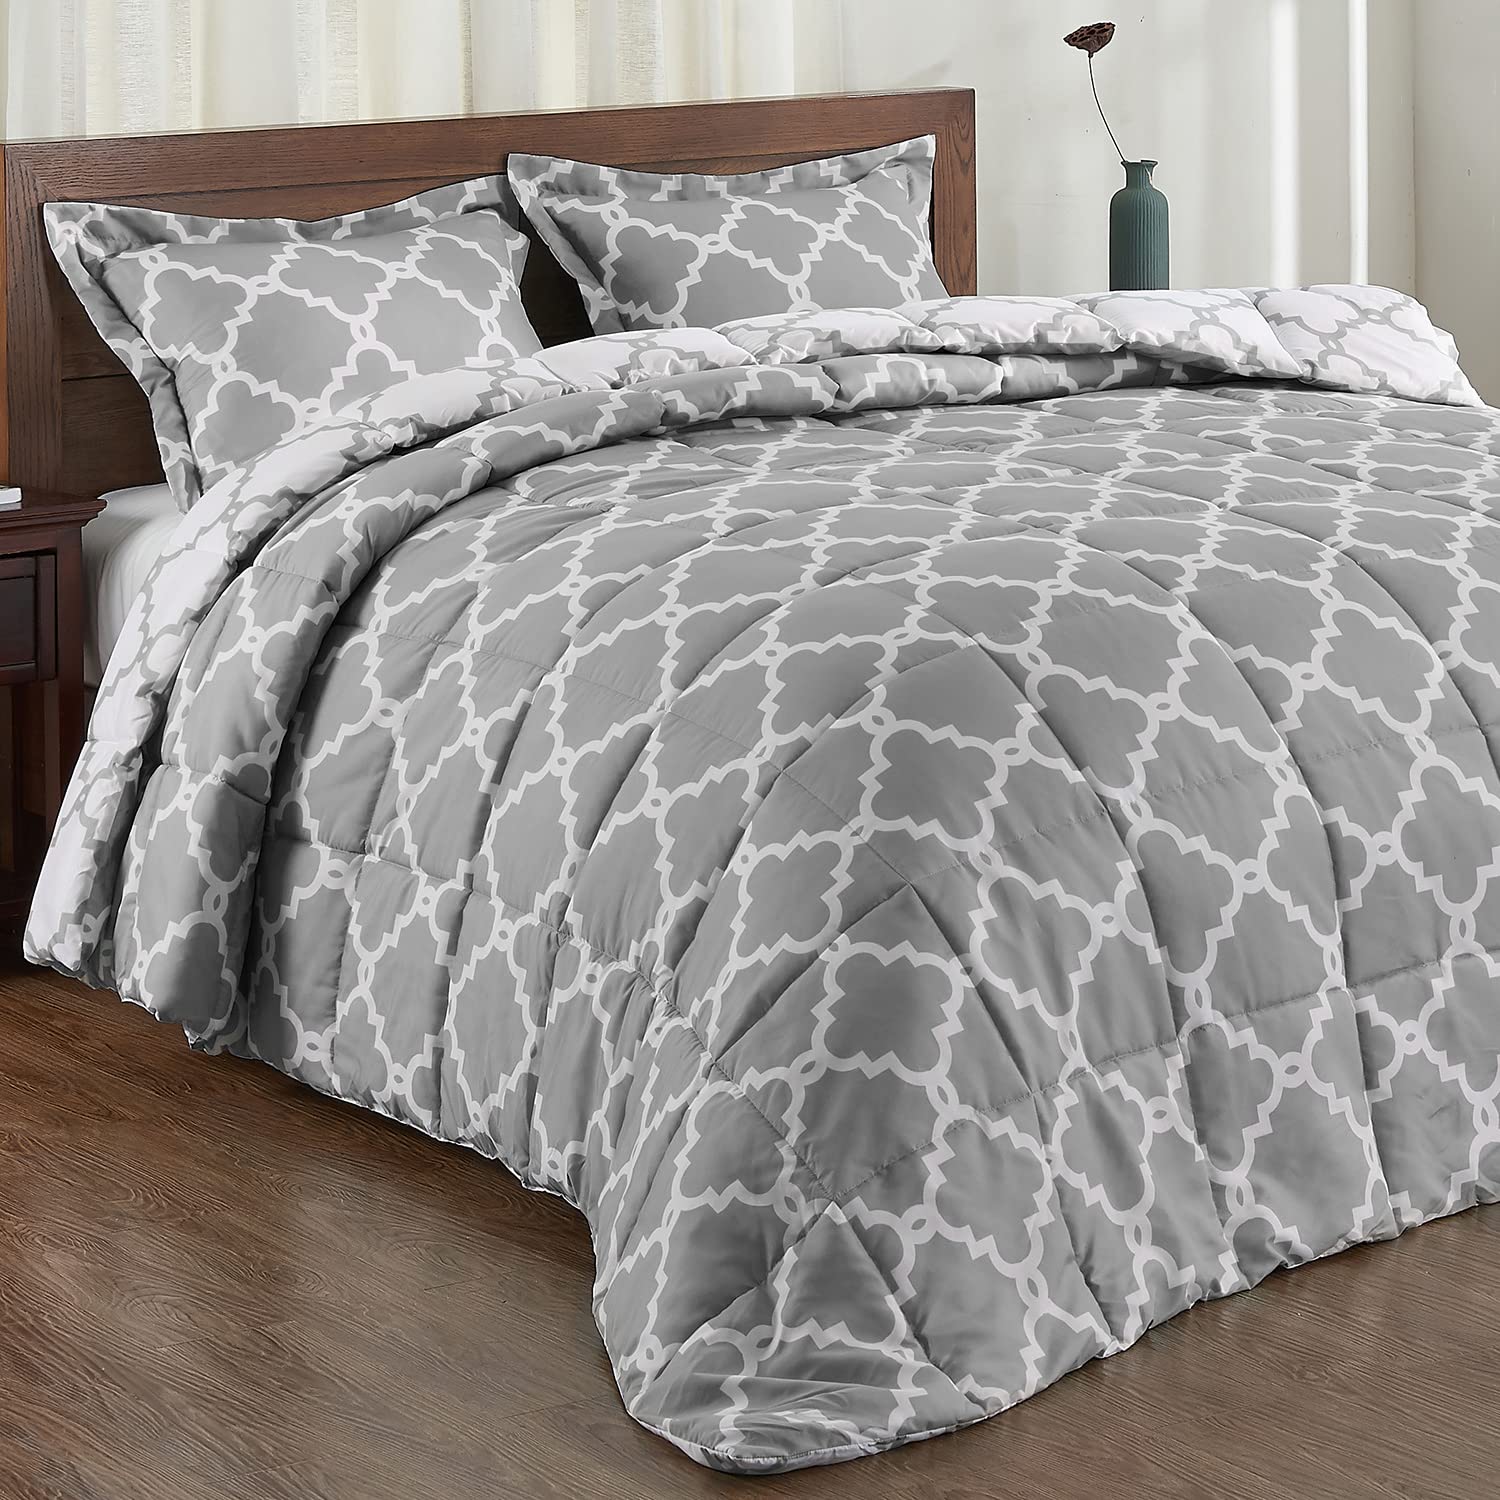 Basic Beyond King Size Comforter Set - Grey King Comforter Sets, Reversible King Bed Comforter Set for All Seasons, Grey, 1 Comf